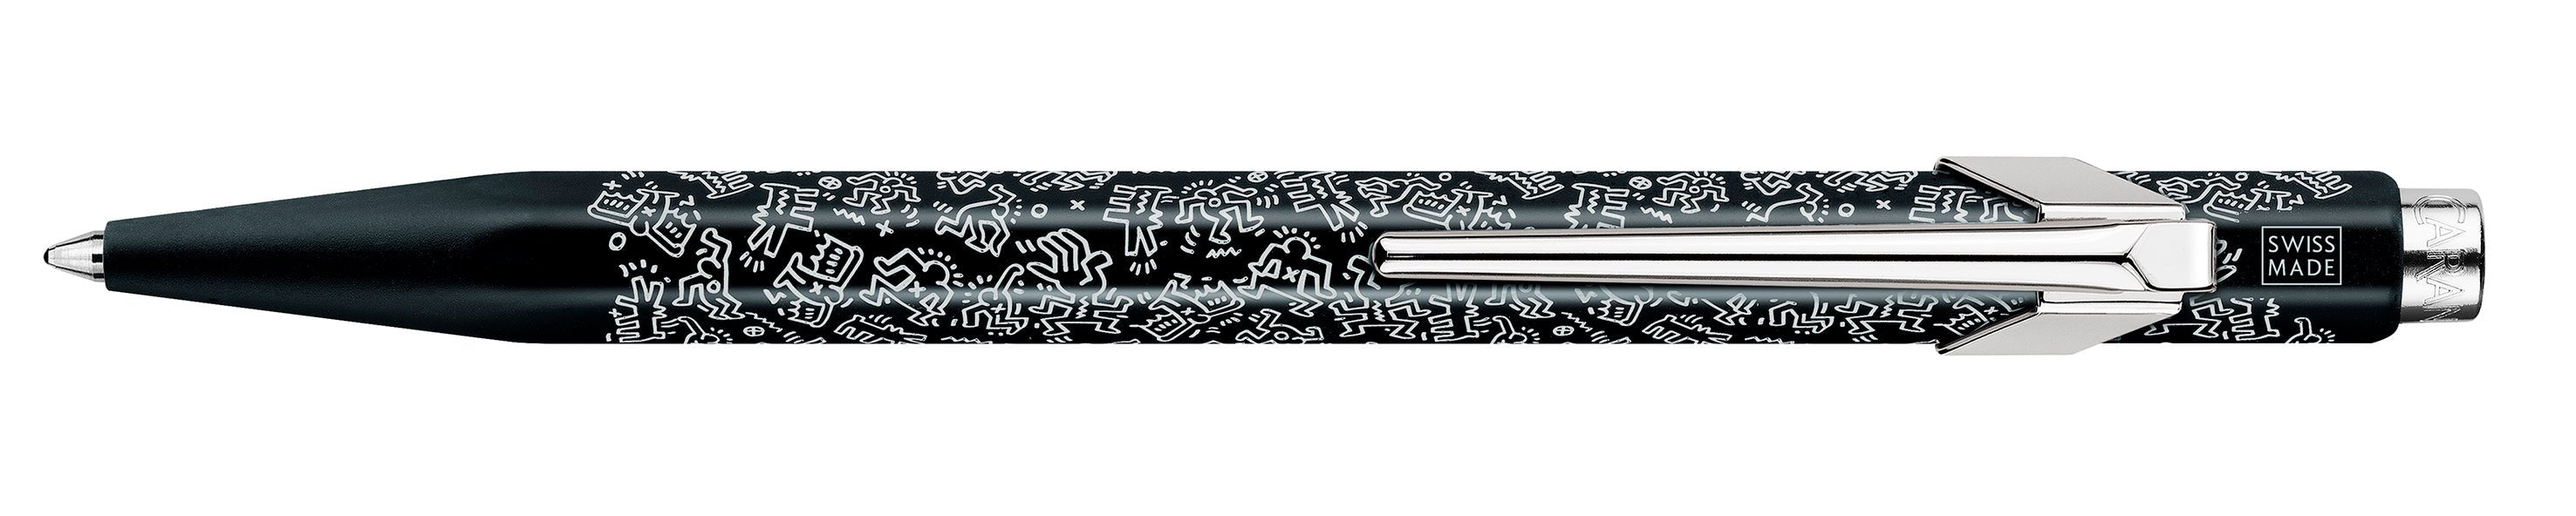 Stylo bille CARAN D'ACHE 849 Keith Haring Edition Spéciale - Medium (M) - Noir - 7630002353809